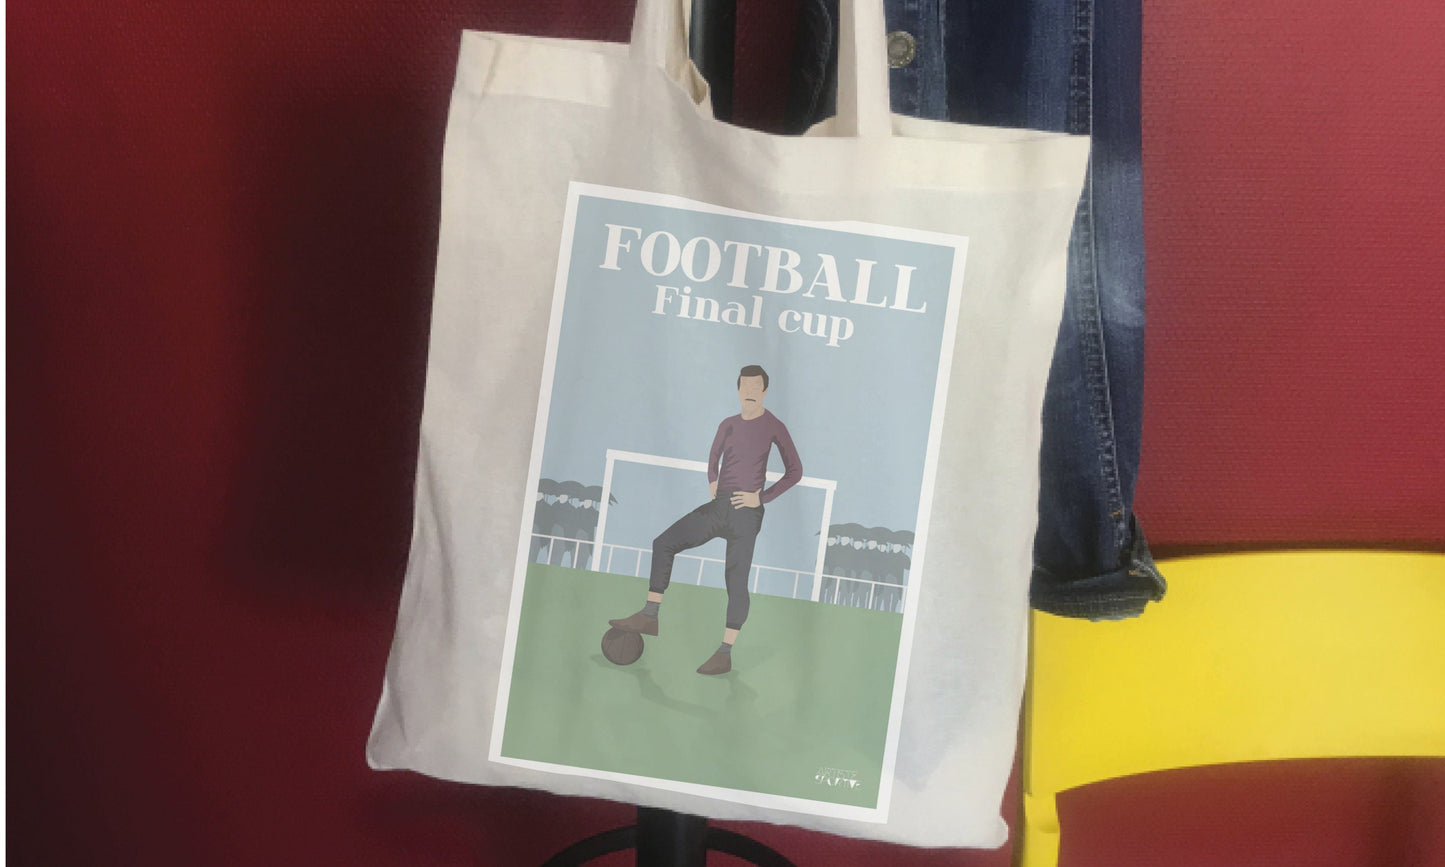 Tote bag ou sac vintage football "The English Game"